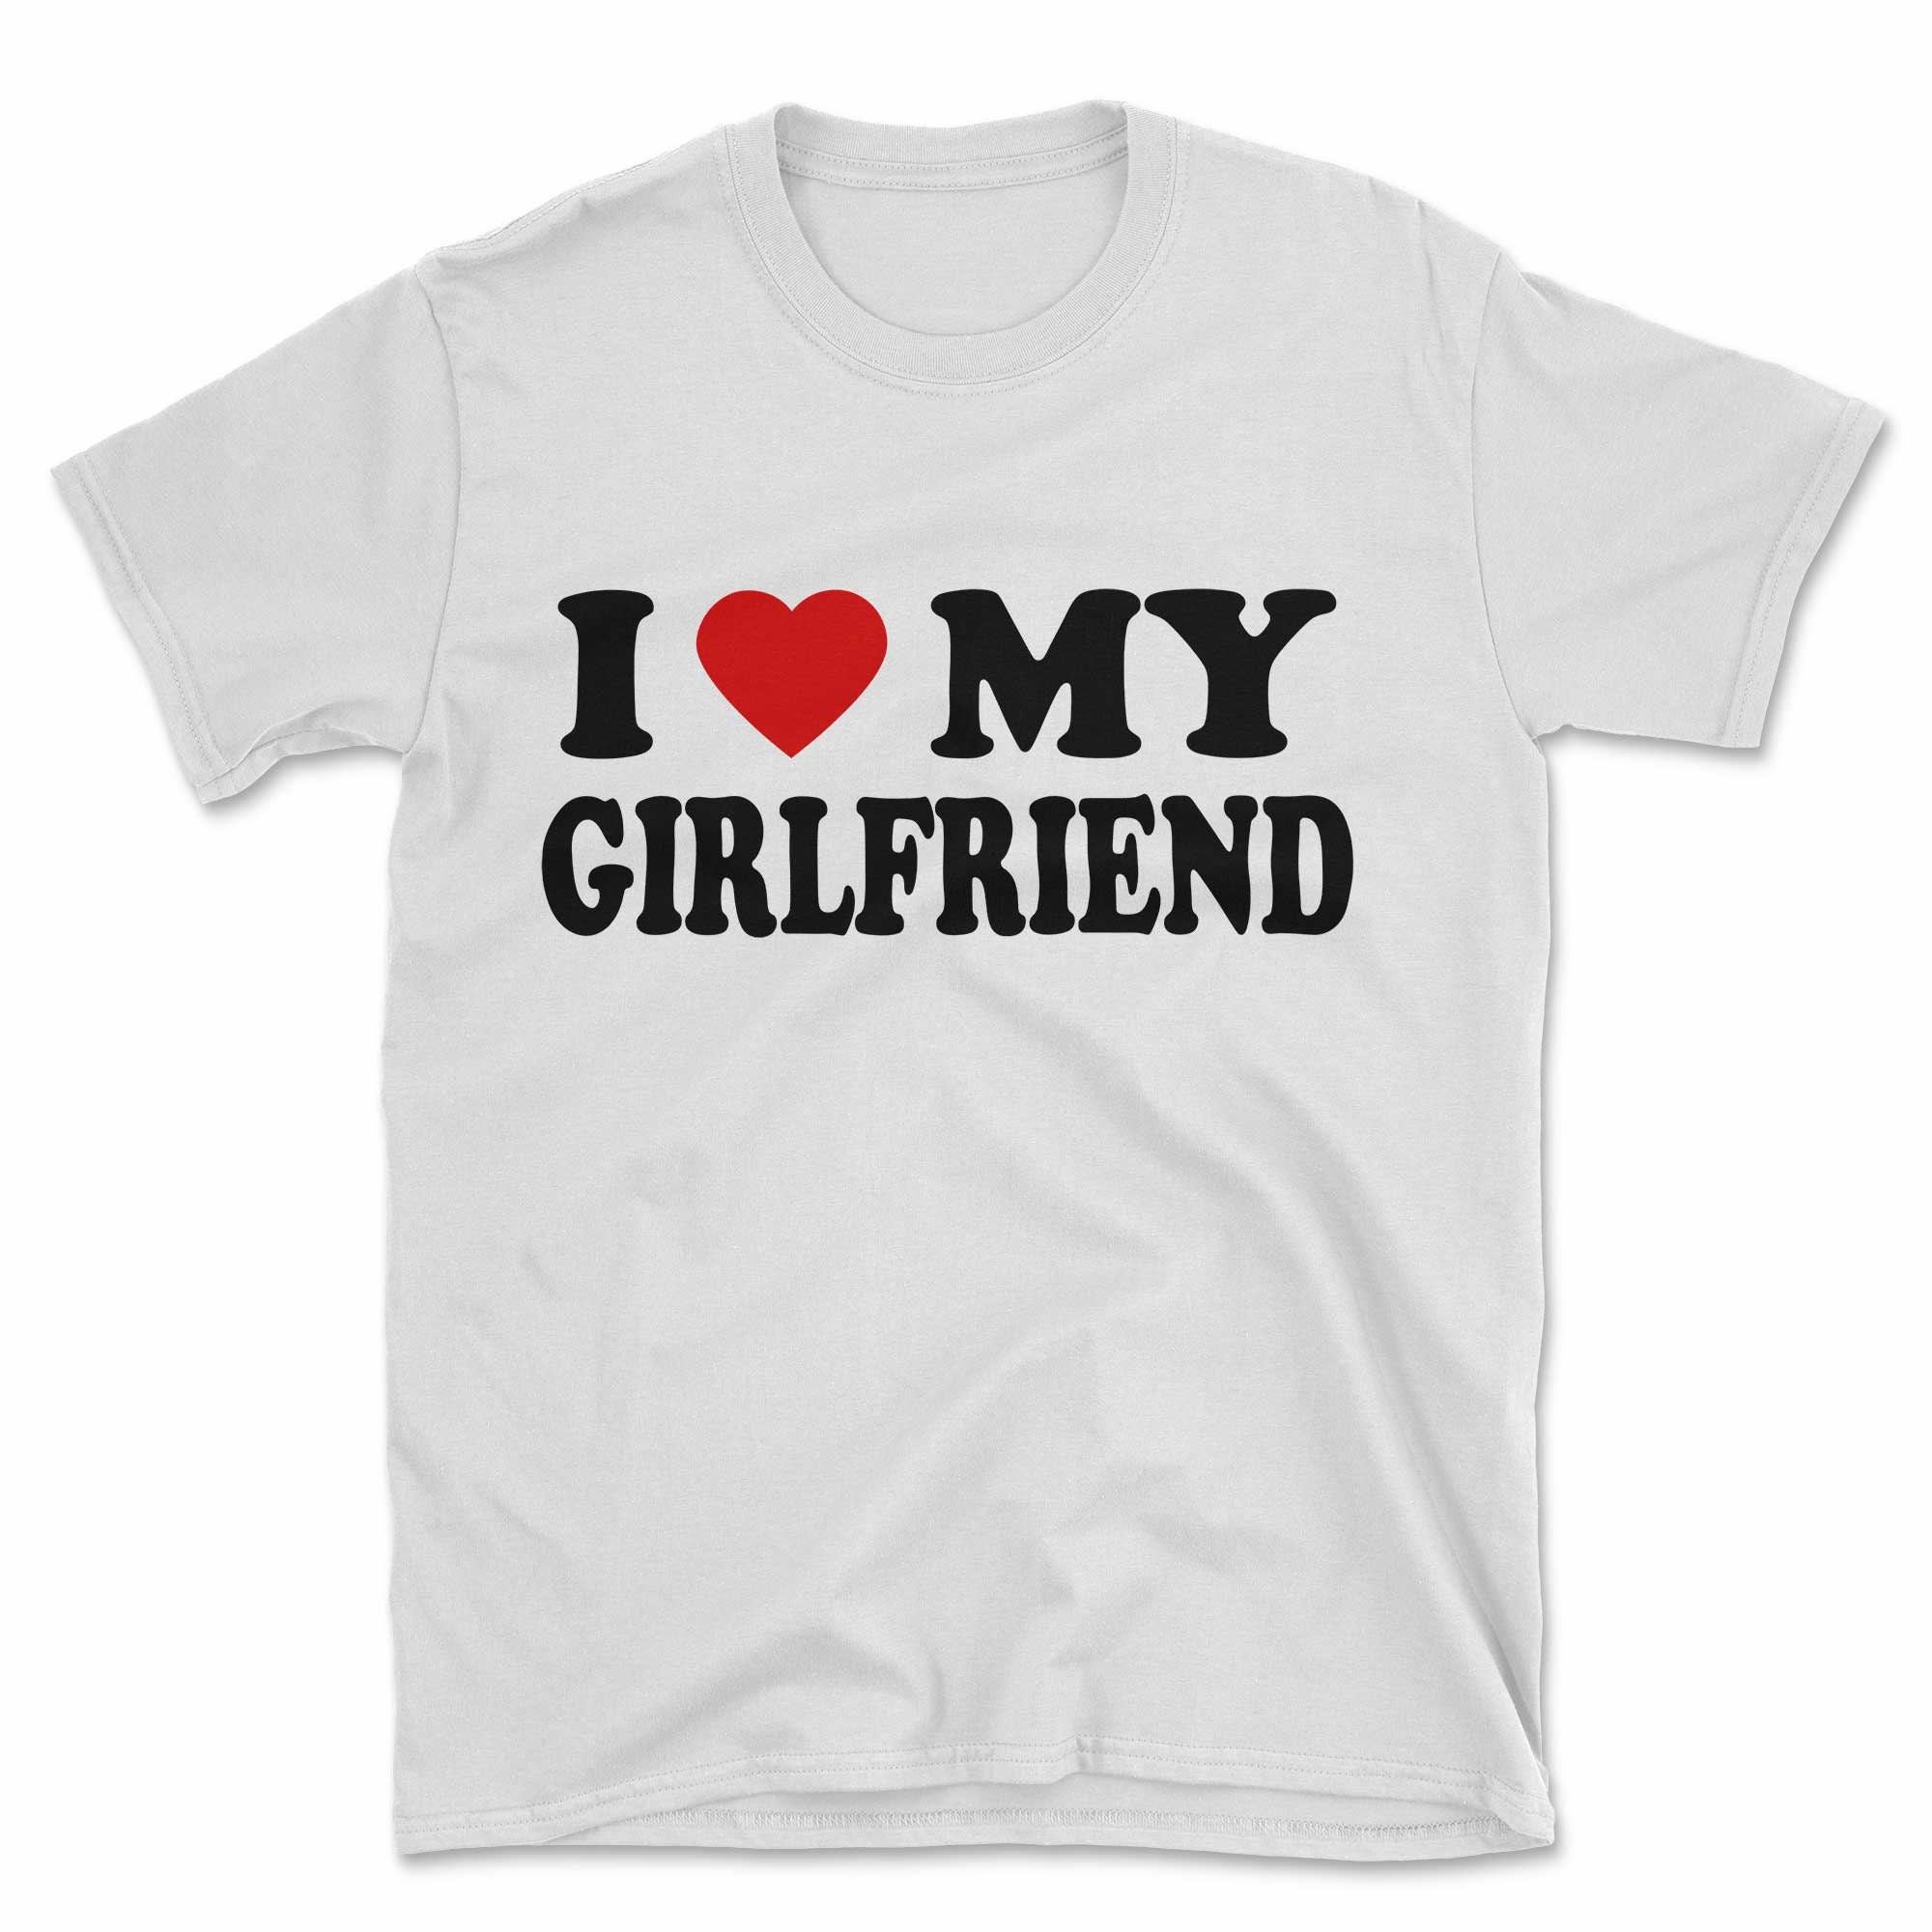 i-love-my-girlfriend-t-shirt-funny-heart-valentine-wedding-etsy